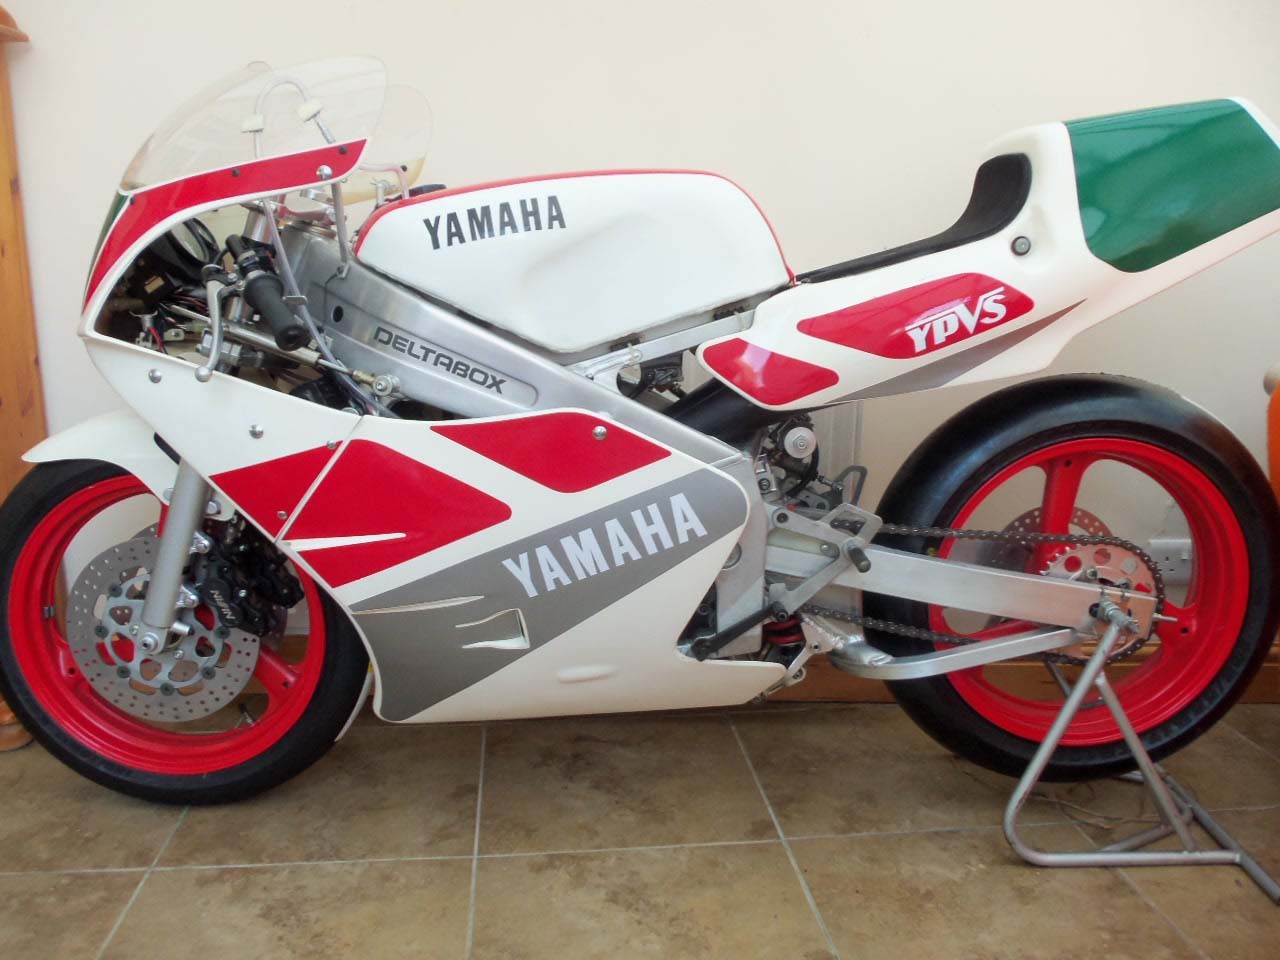 1989 Yamaha TZ250W